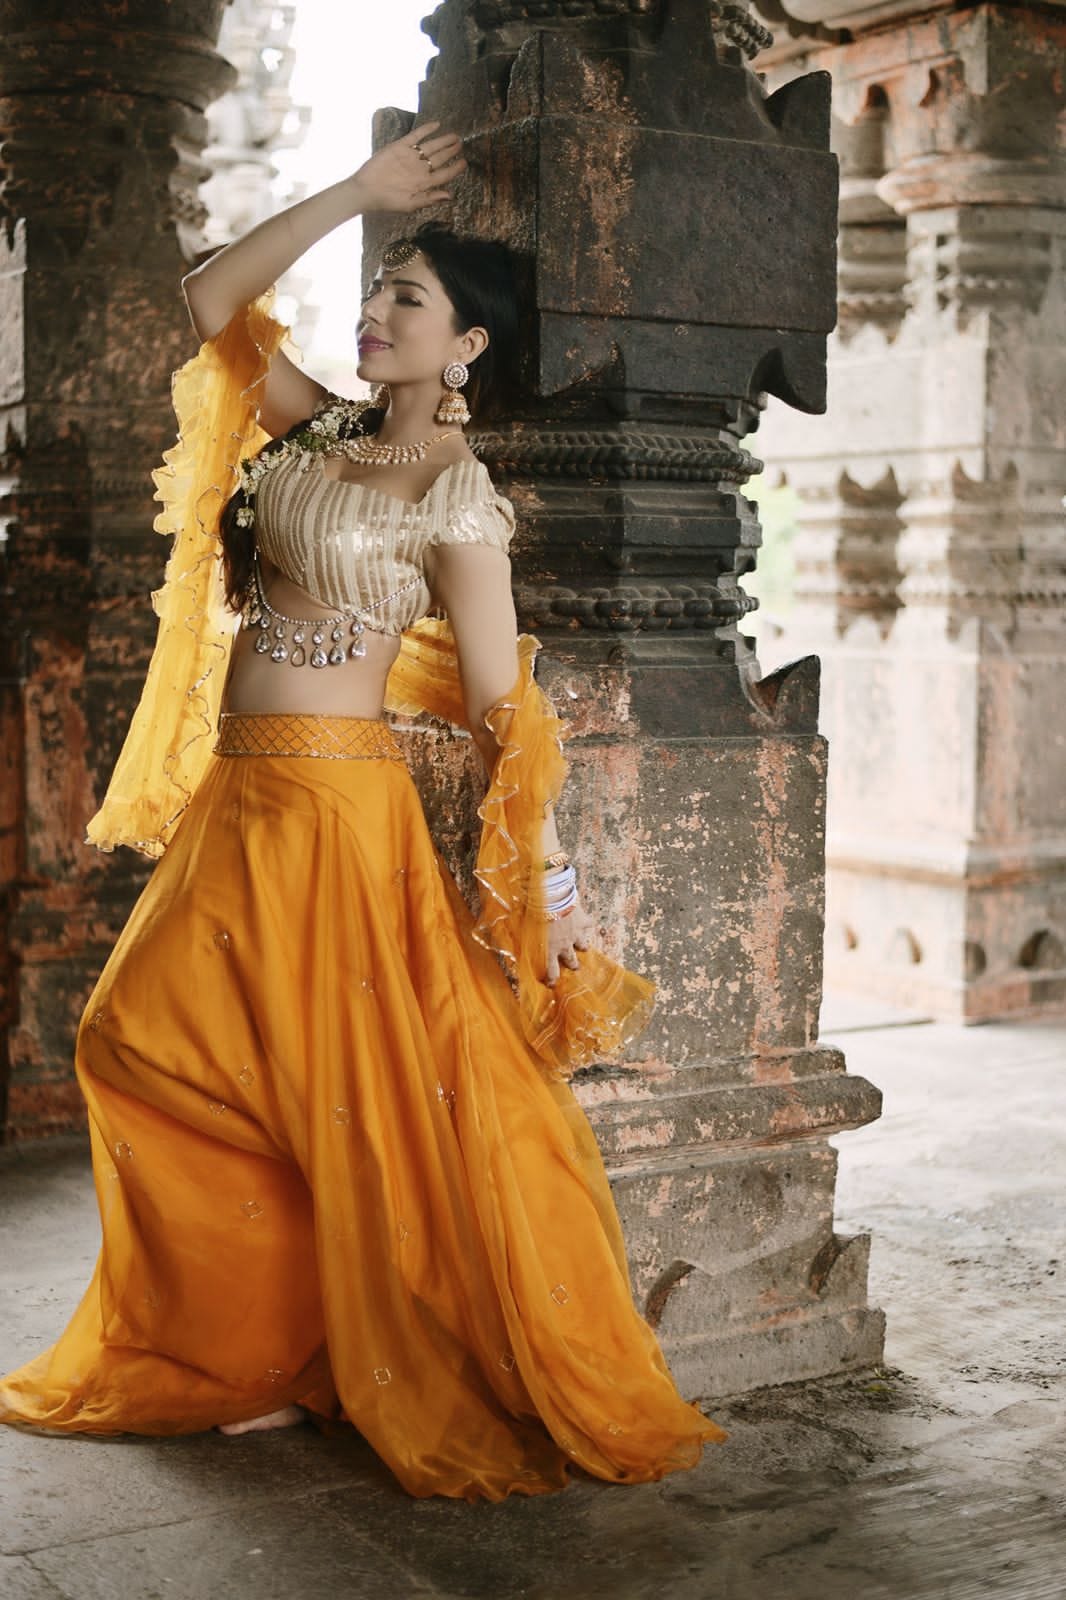 Actress maahi khan Lives Out Royal Dreams As She Poses In Traditional Attire